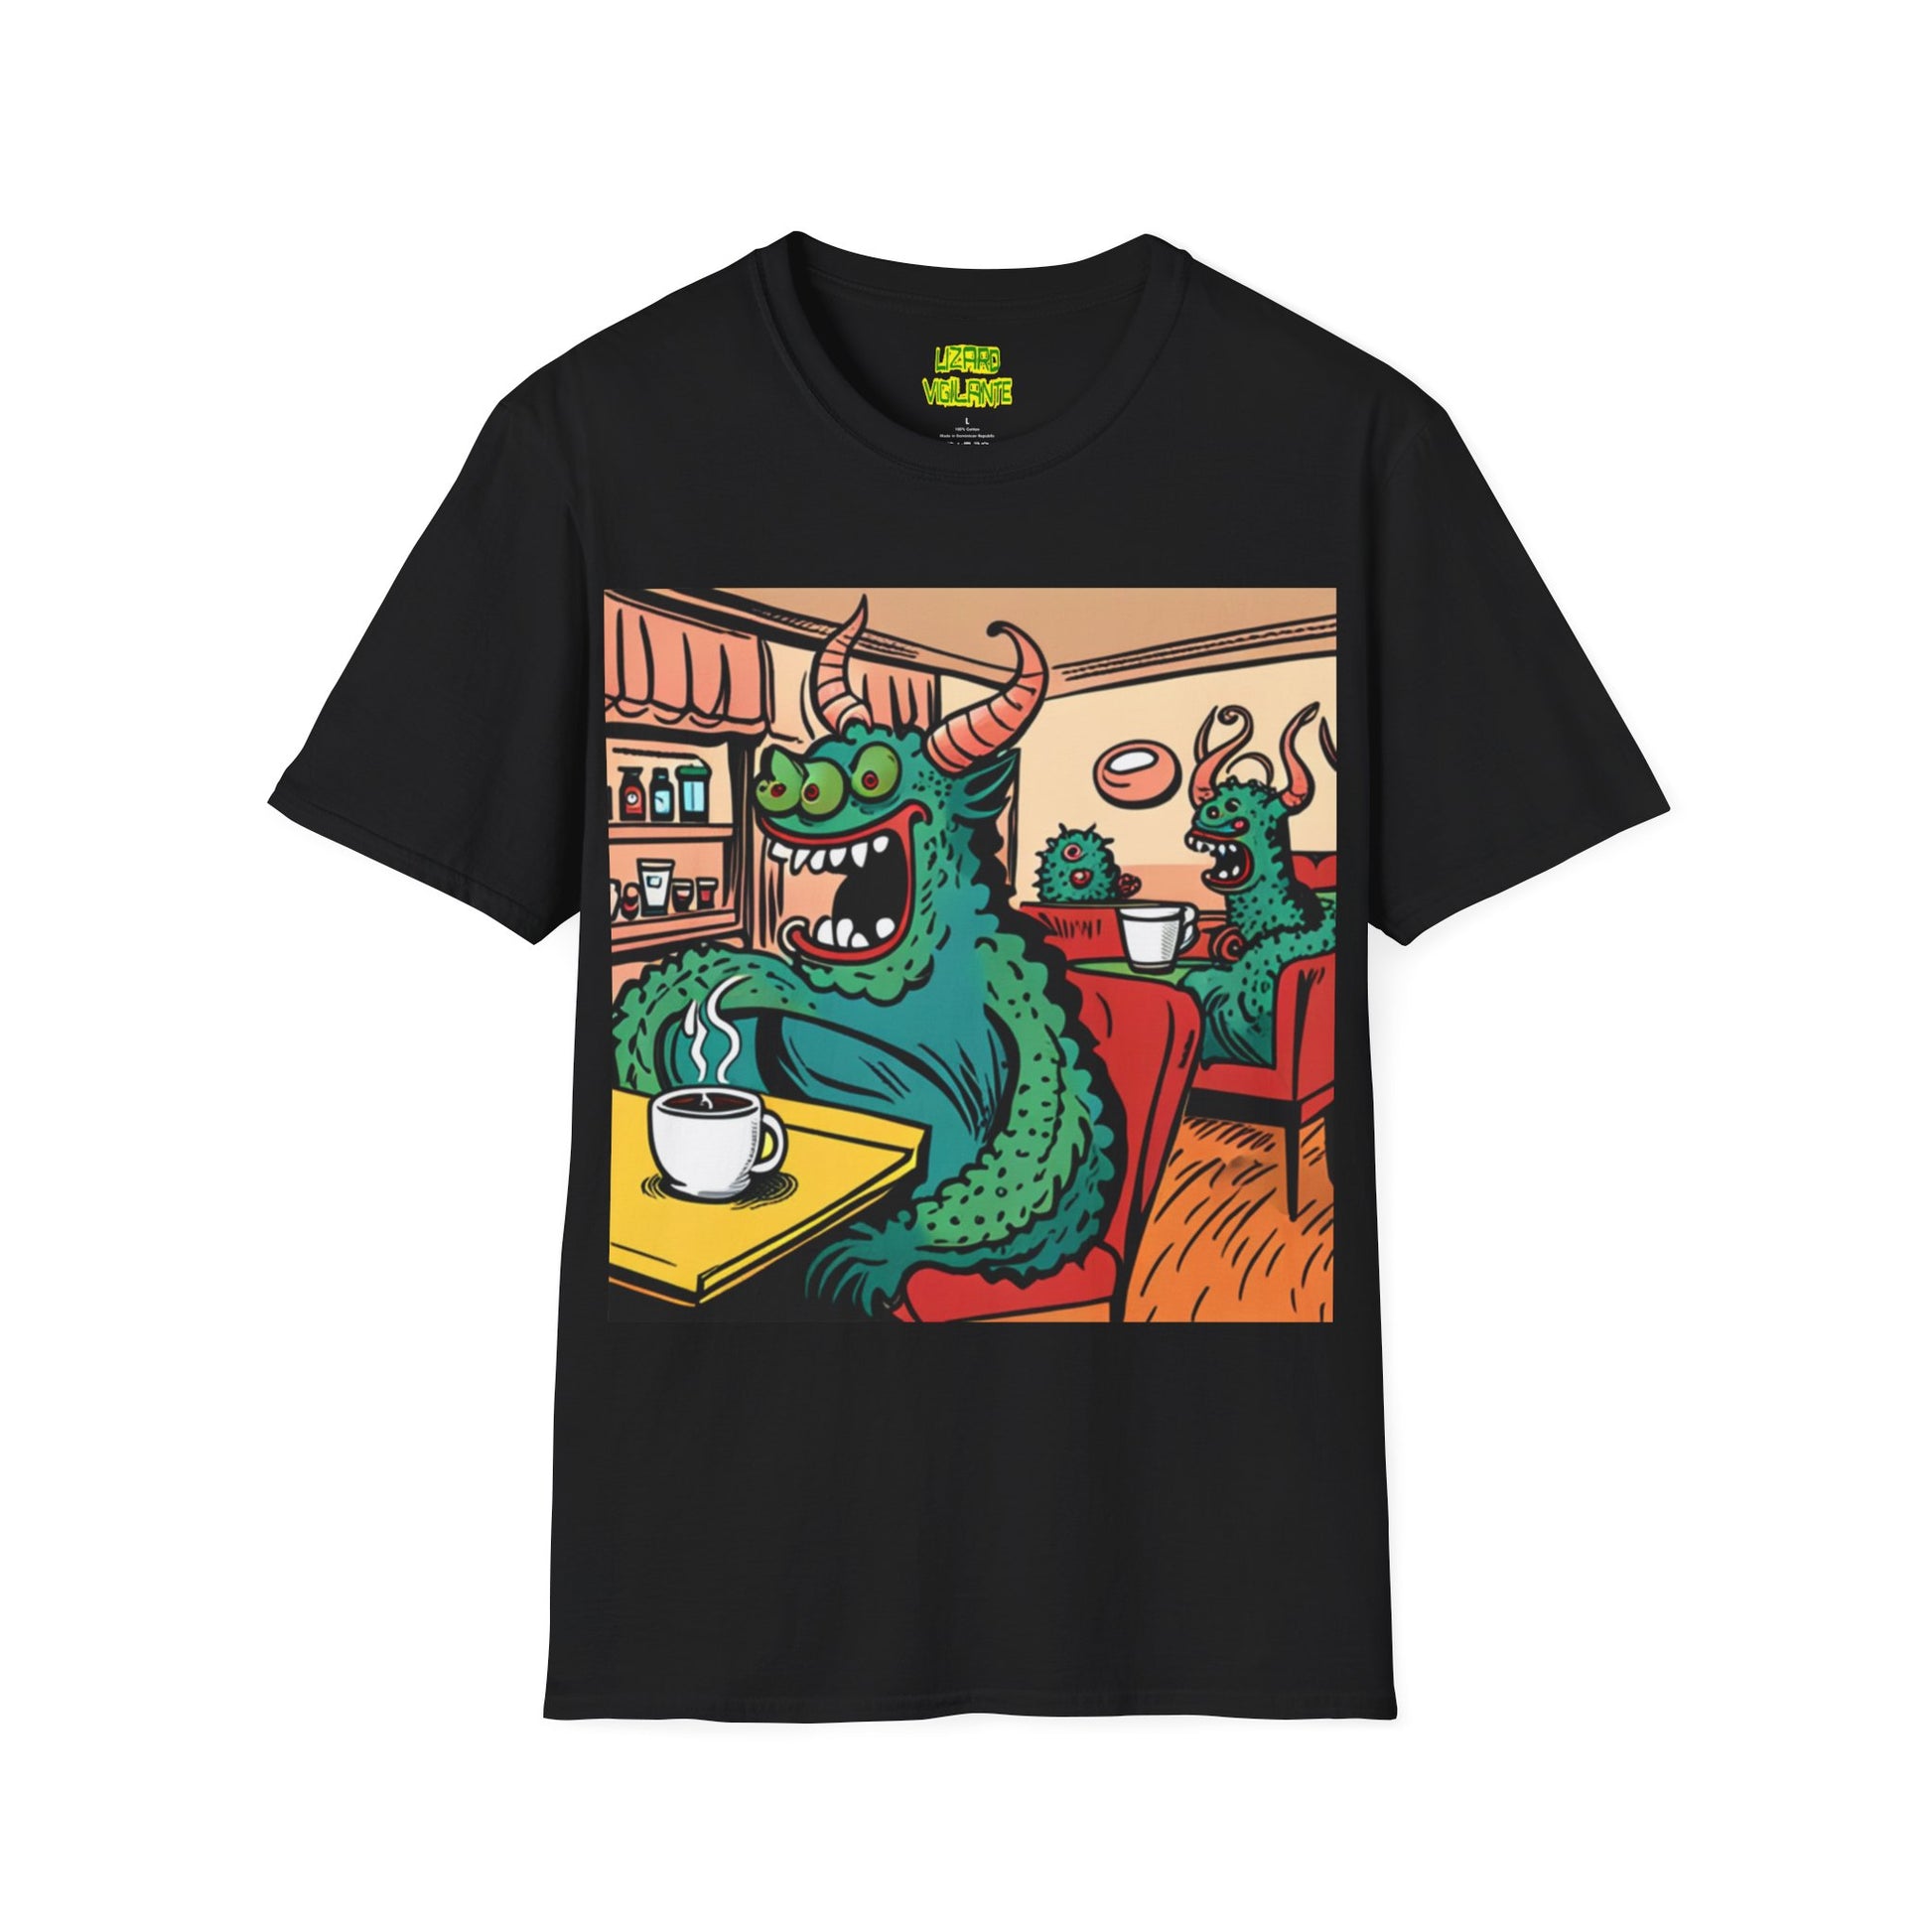 Lizard Vigilante Premium Coffee Monsters Unisex Softstyle T-Shirt - Lizard Vigilante